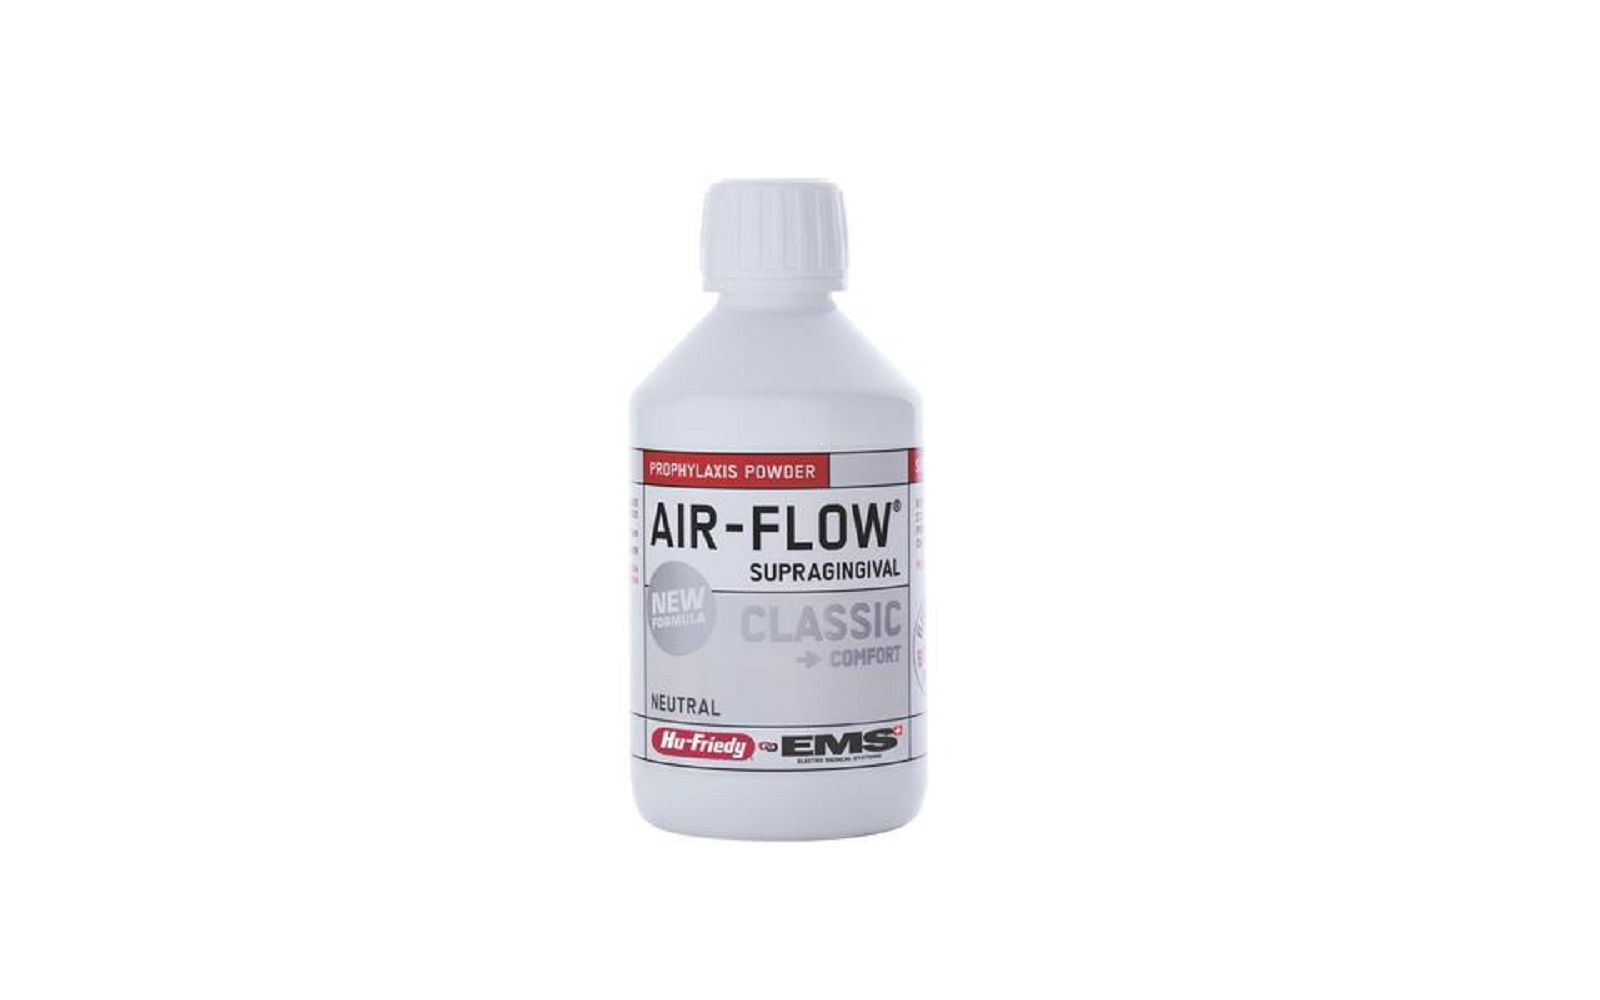 Air flow® classic comfort prophy powder – 300 g bottle, 4/pkg - hu-friedy manufacturing co inc